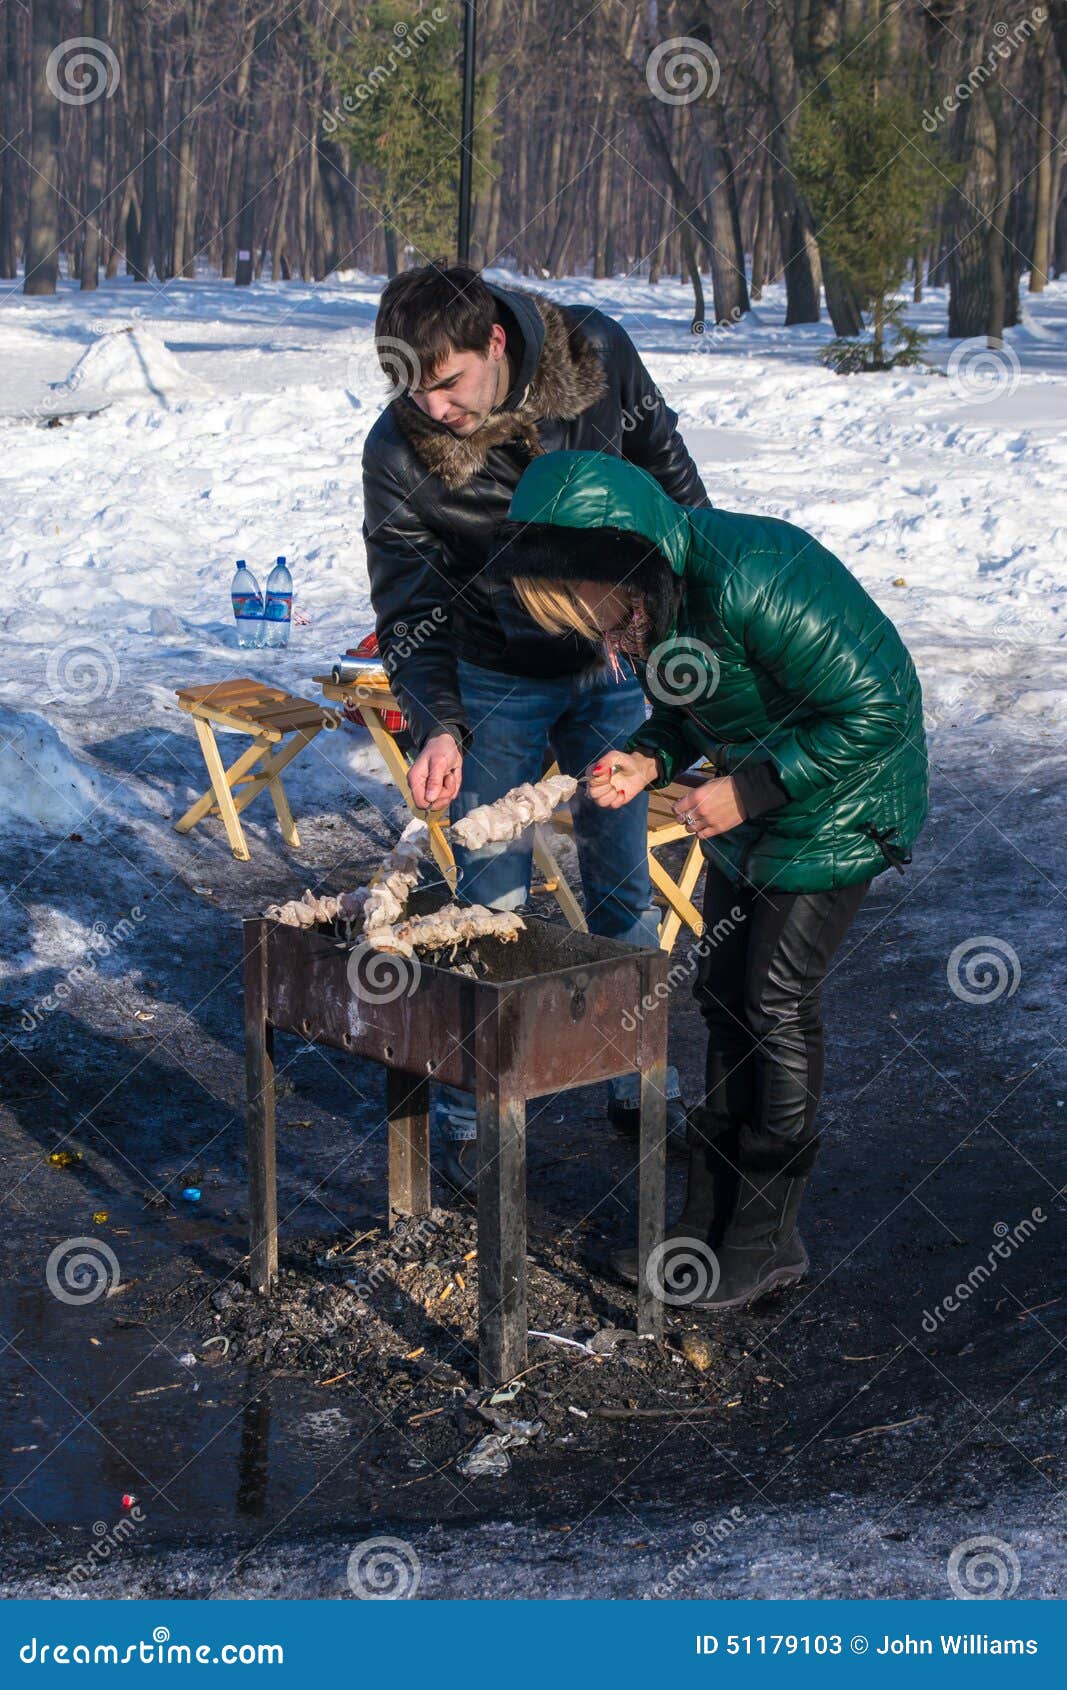 Laissons les entre eux, faut pas les déranger. Traditional-russian-shashlik-barbecue-winter-ufa-bashkortostan-russia-th-march-man-wife-enjoy-snow-51179103